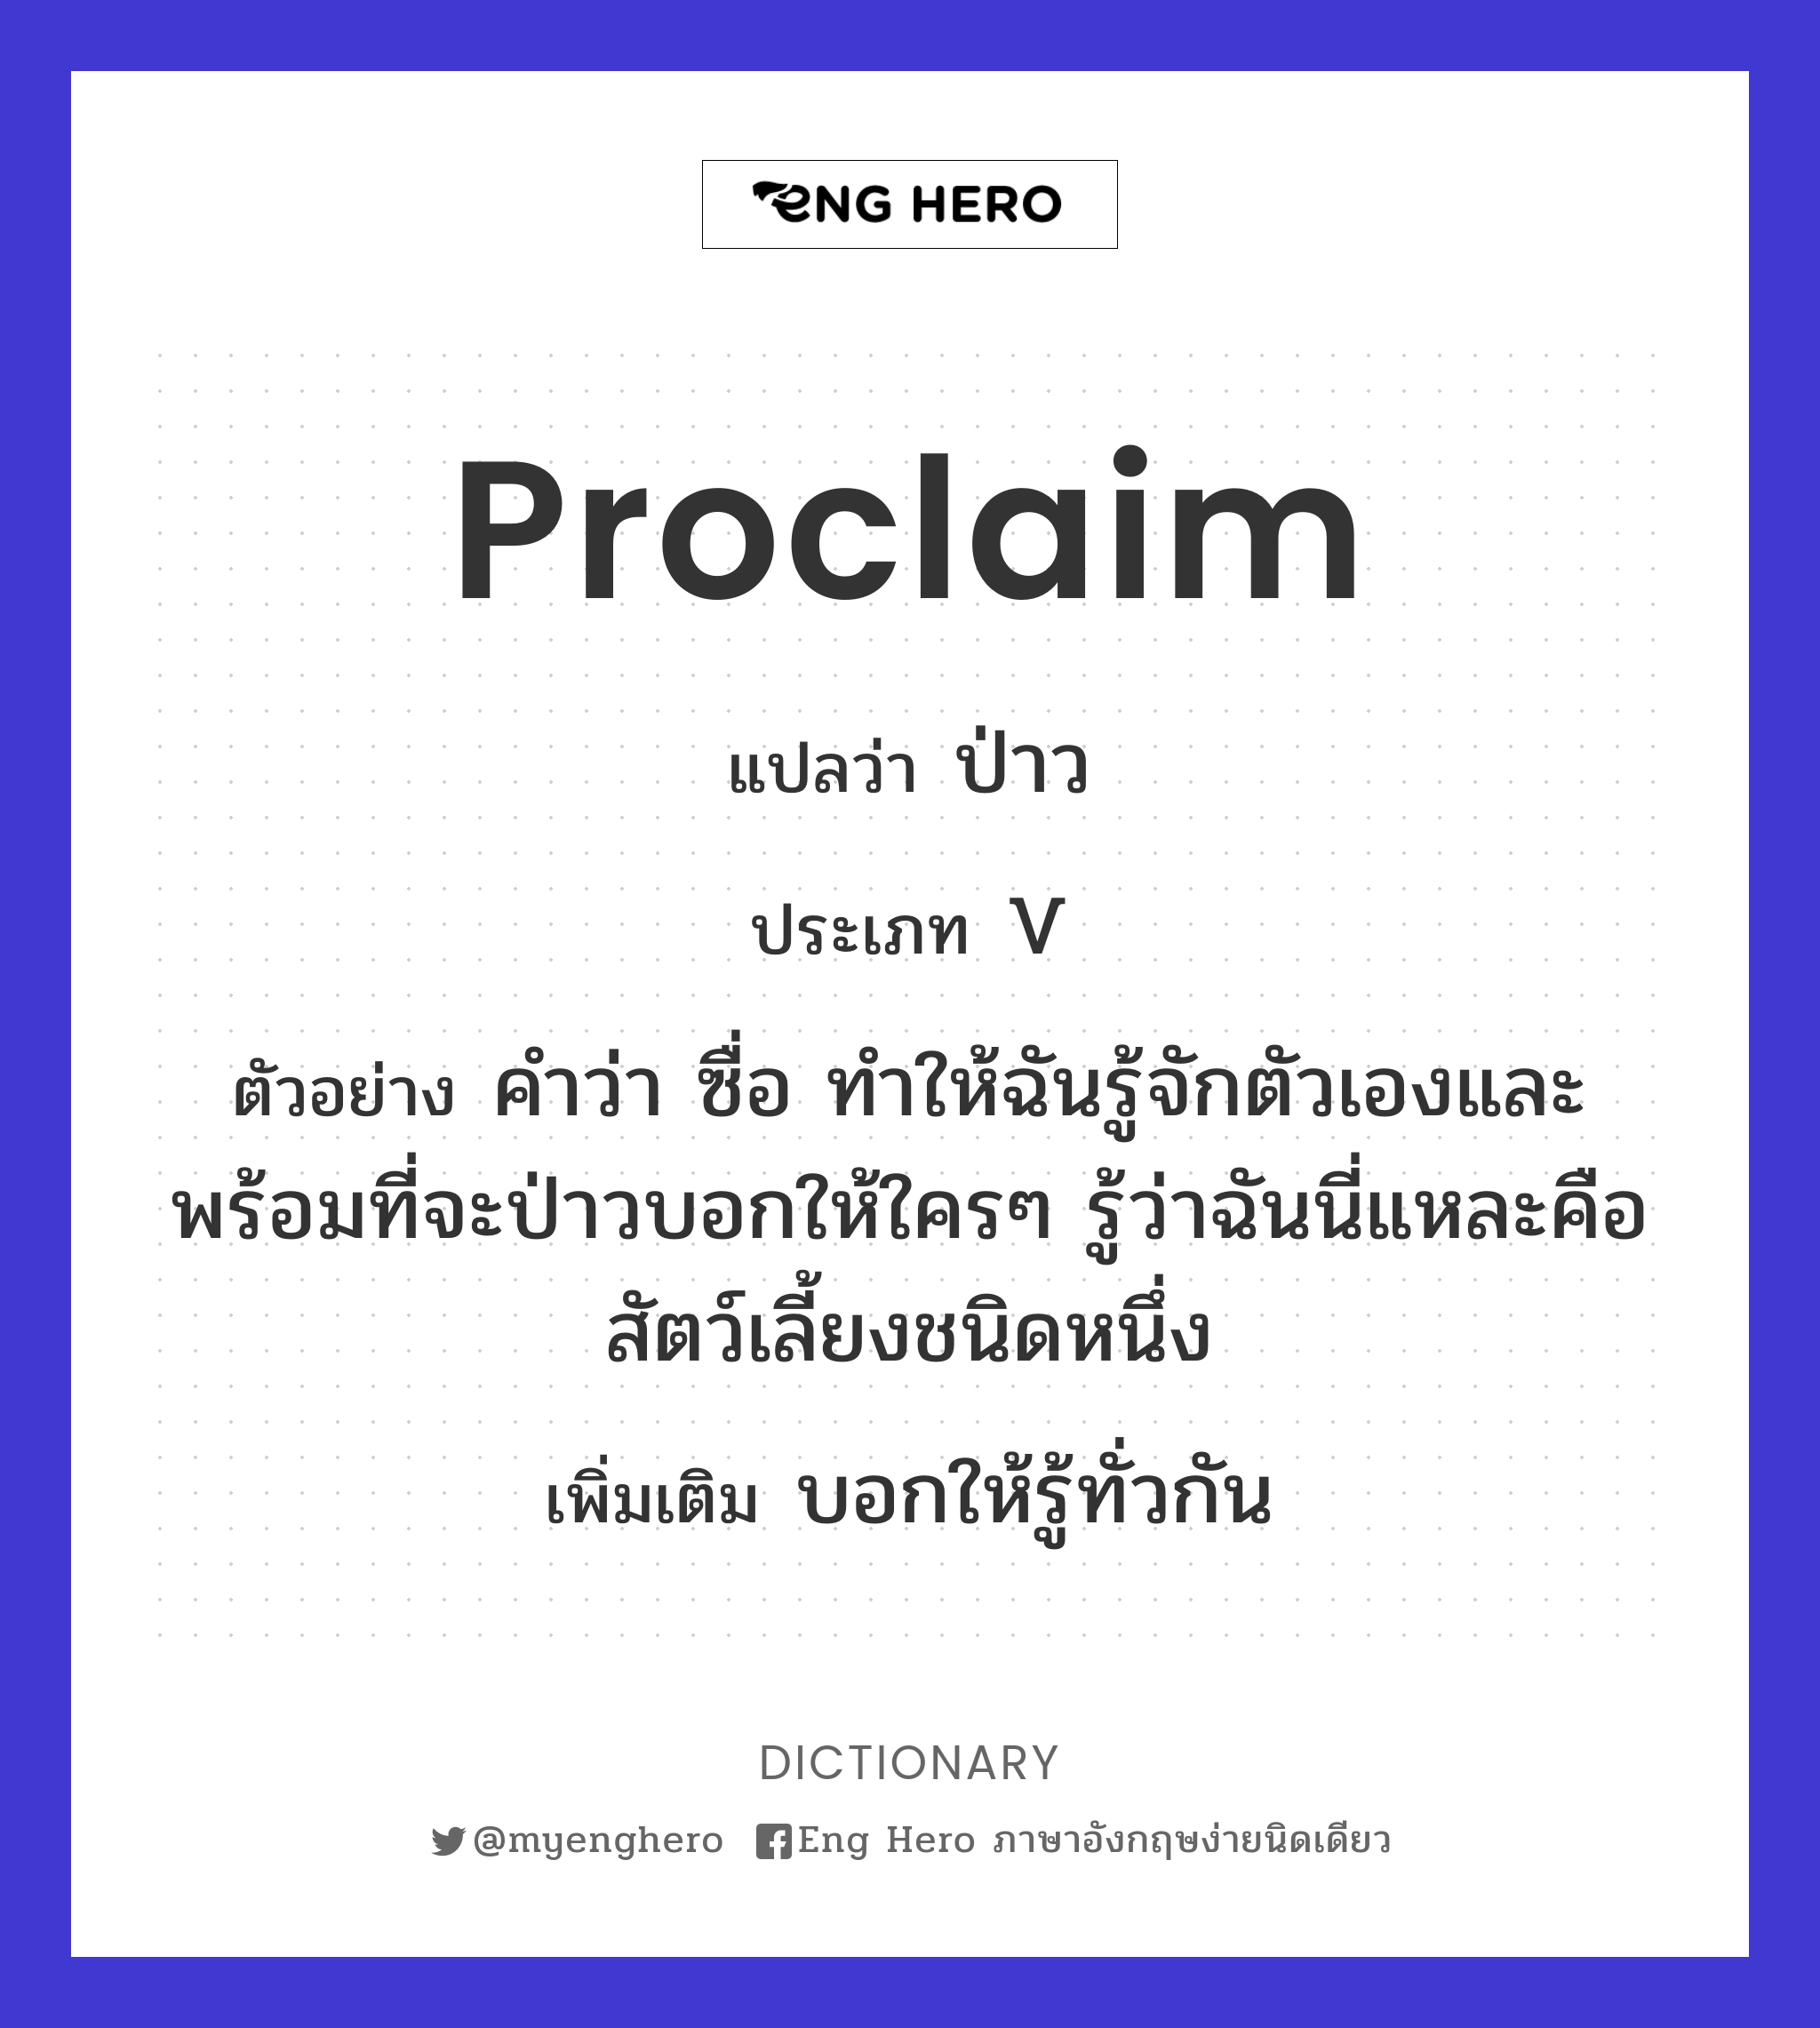 proclaim